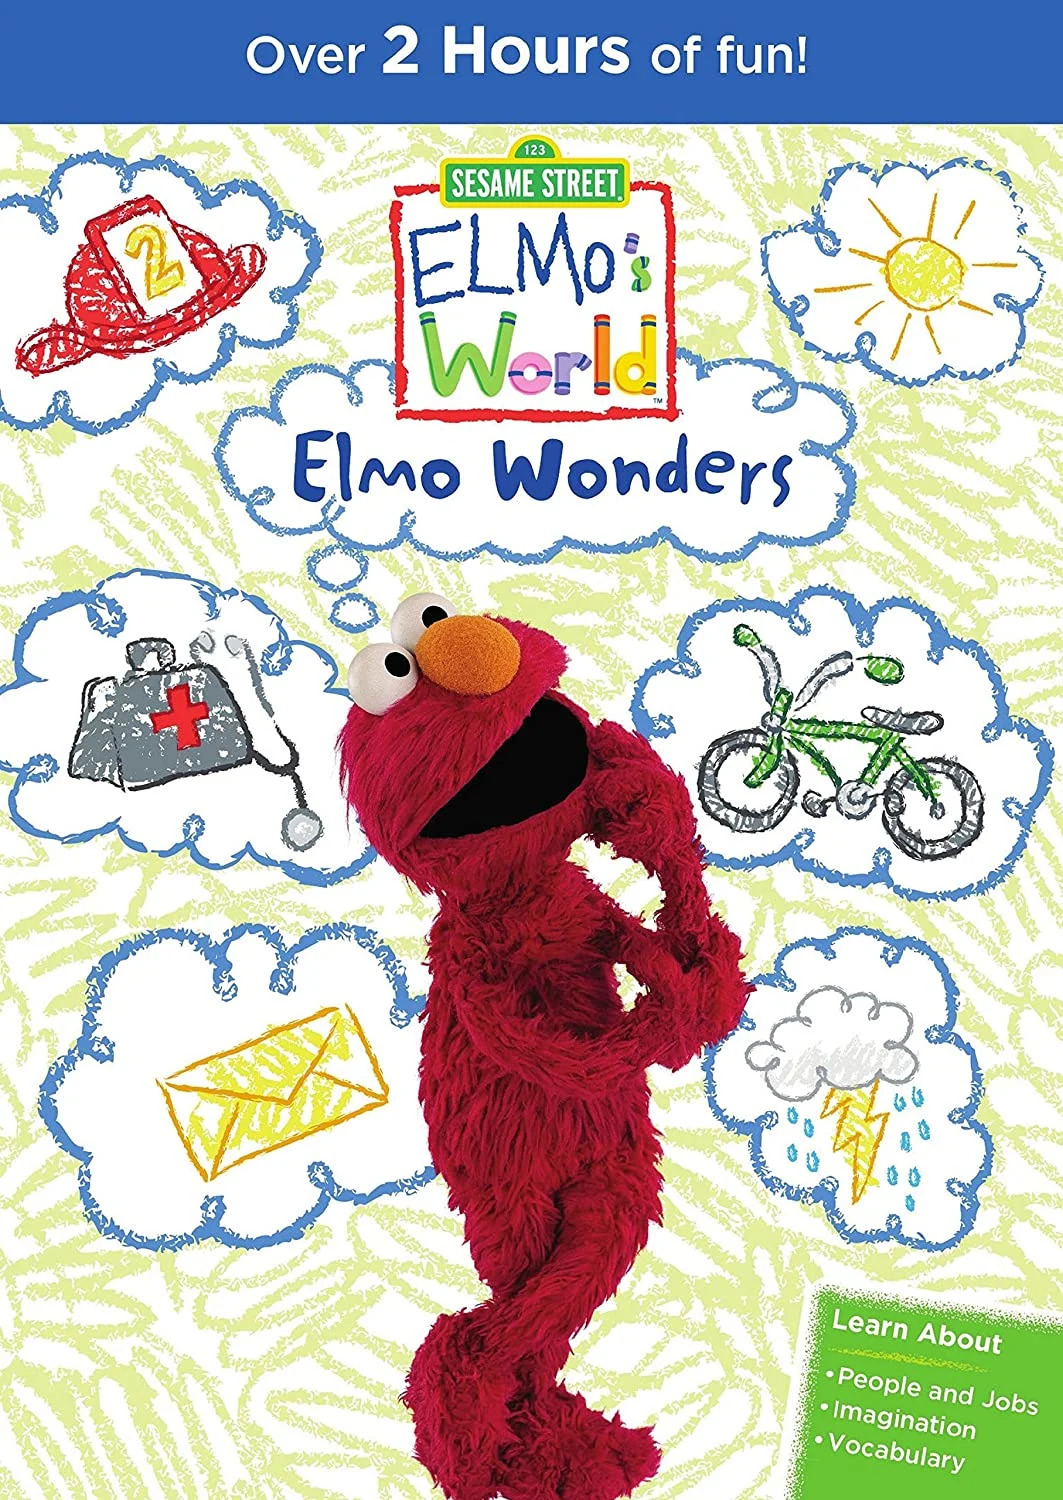 Elmo’s World: Elmo Wonders (DVD) on MovieShack